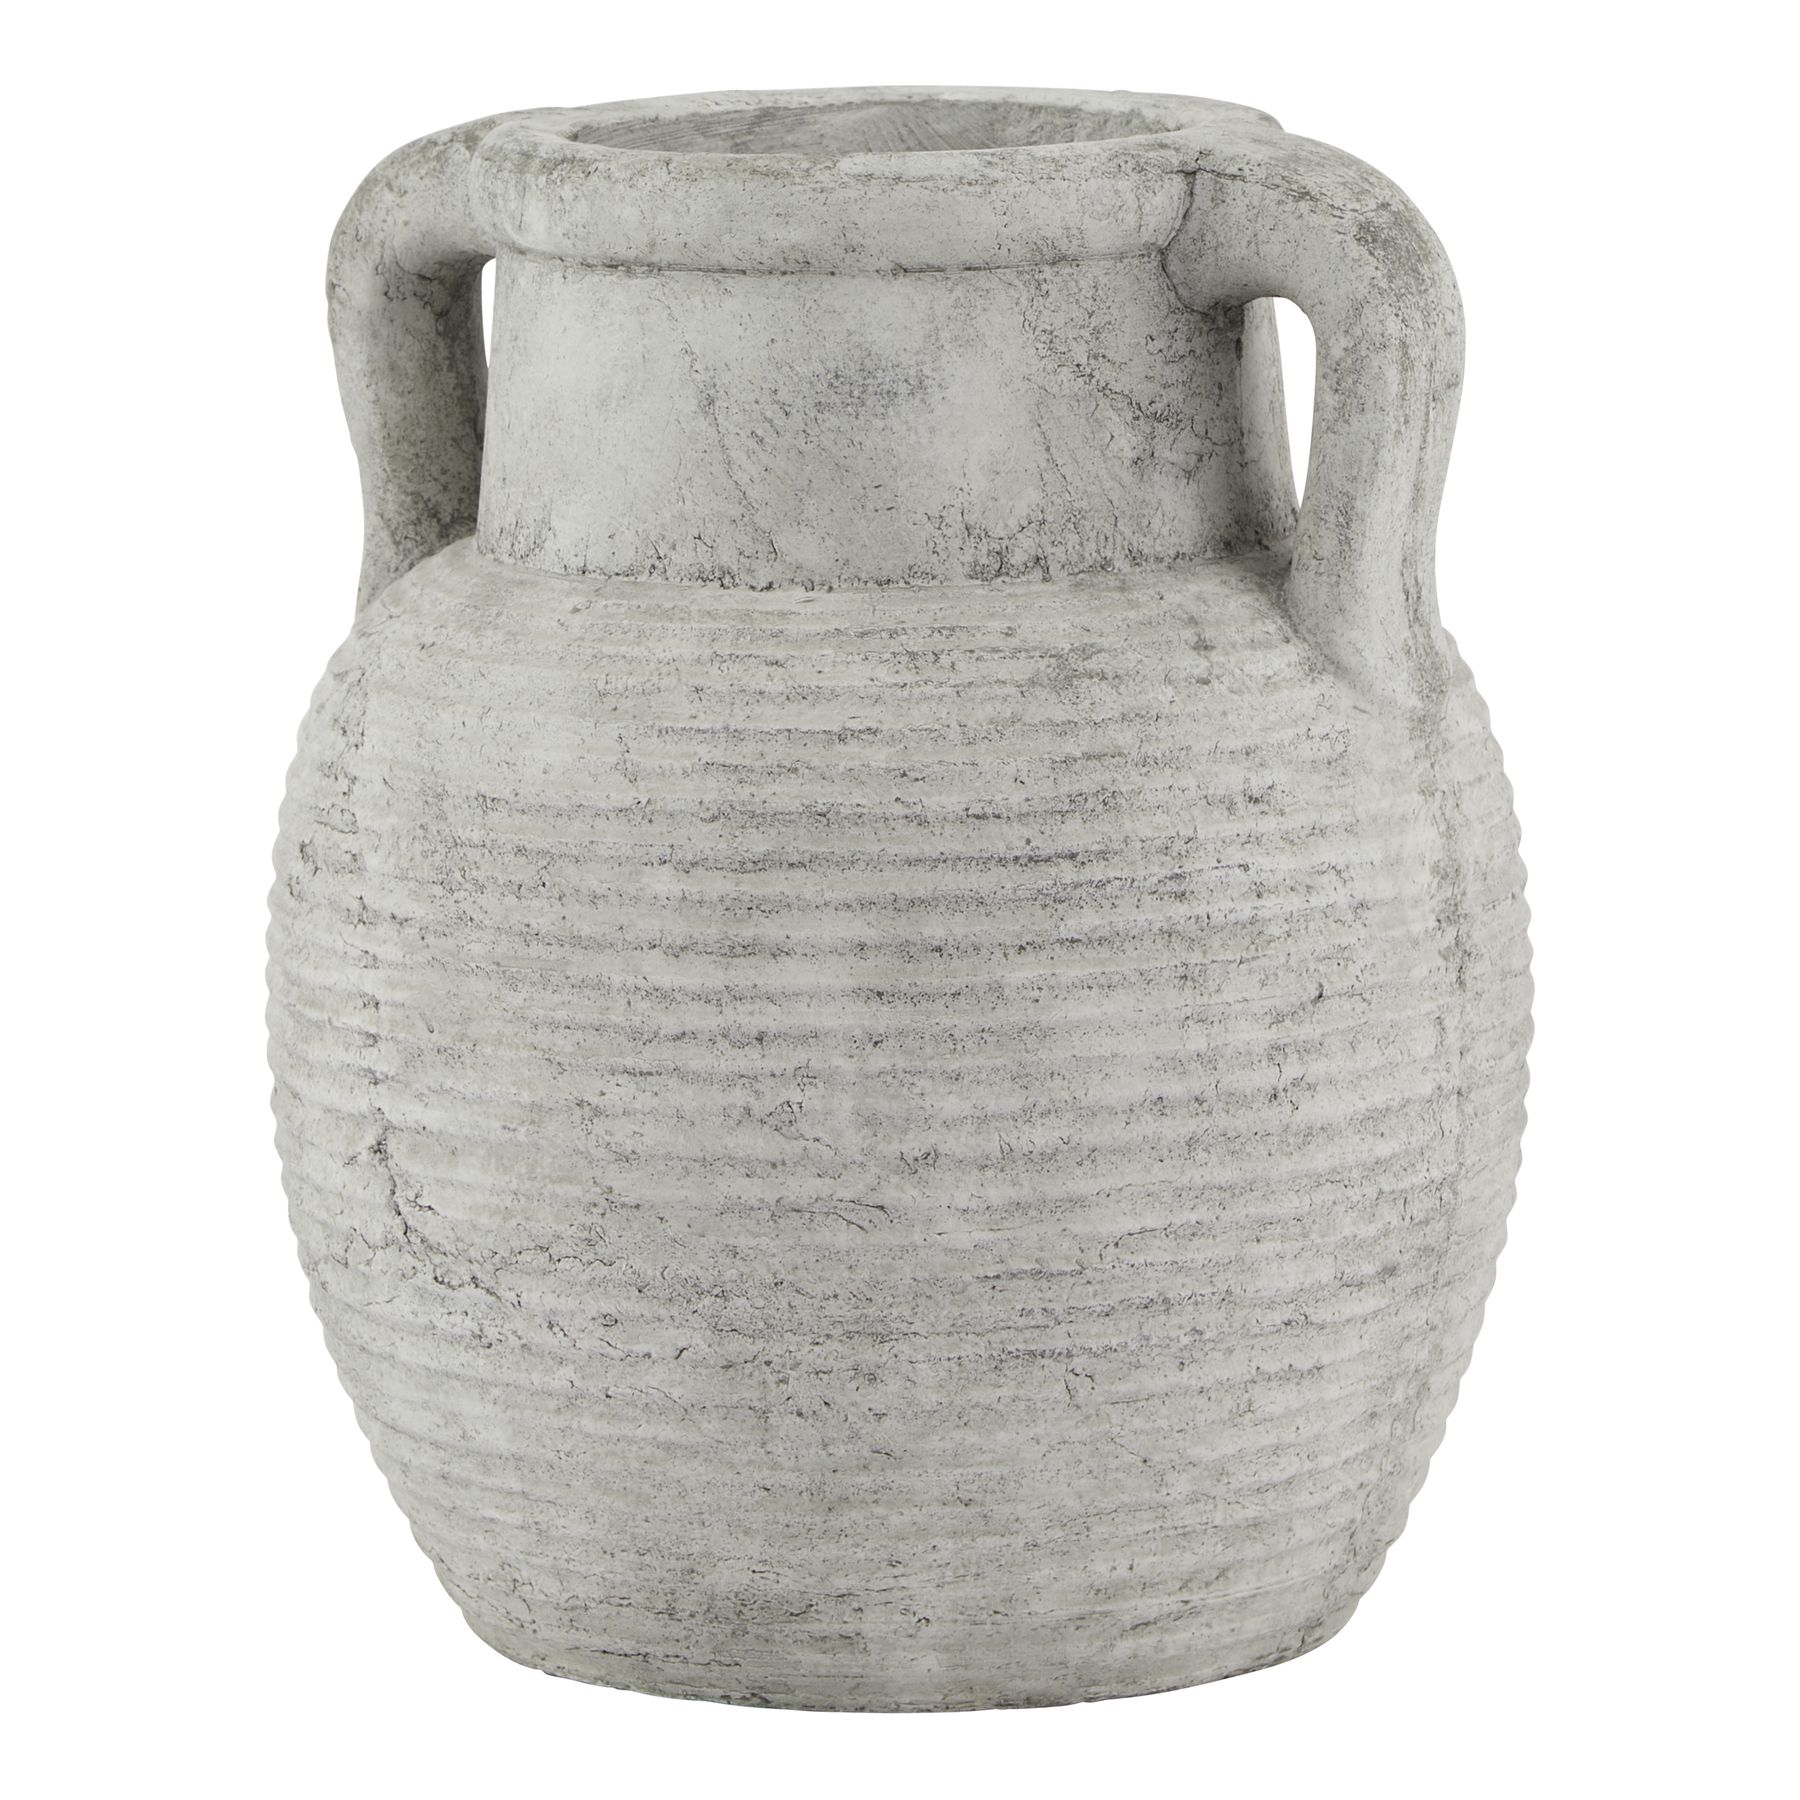 Athena Stone Amphora Pot - Image 1